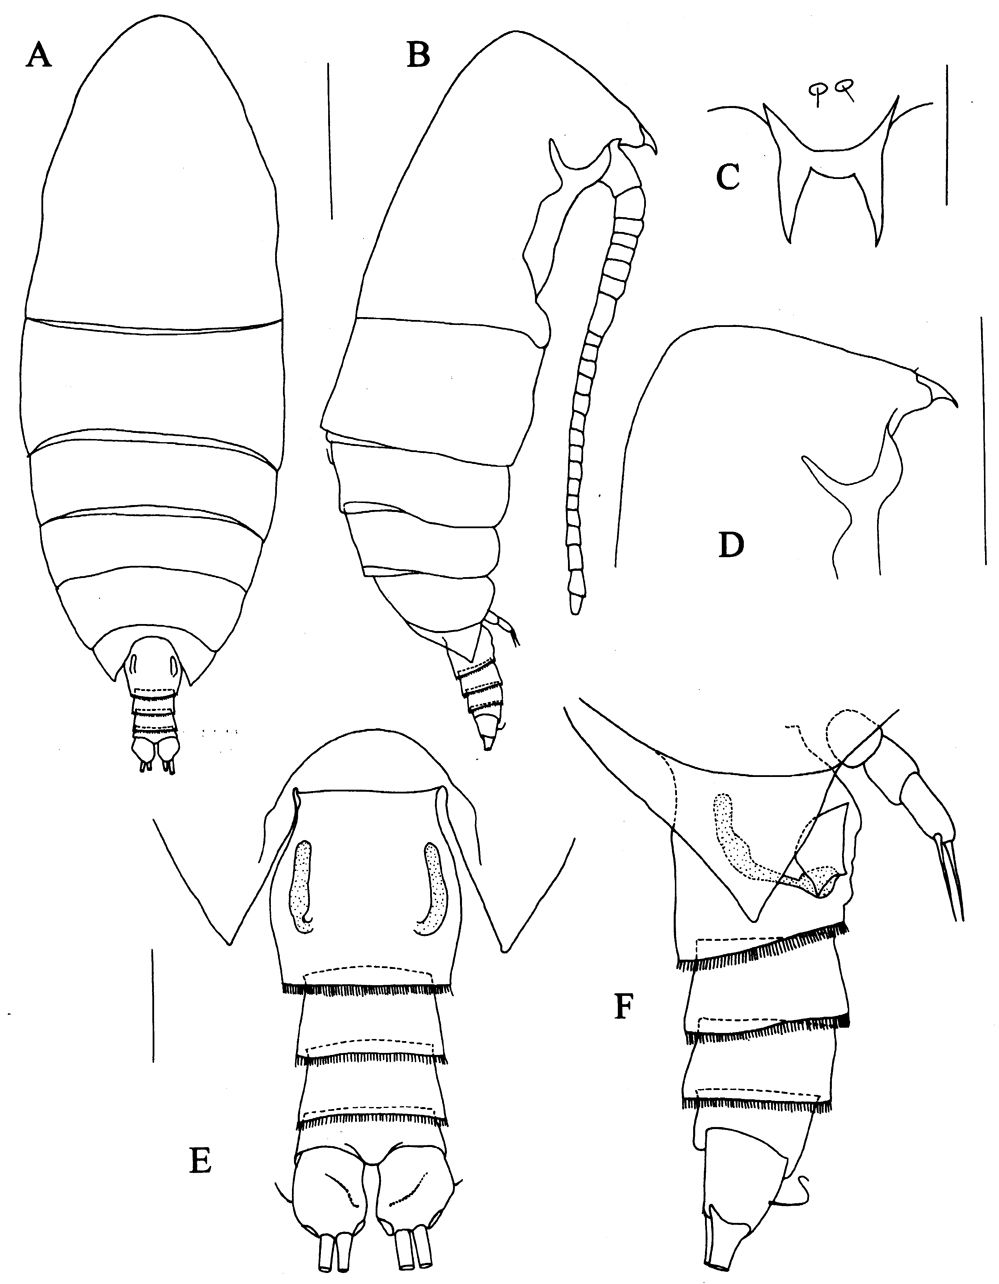 Species Kyphocalanus atlanticus - Plate 1 of morphological figures